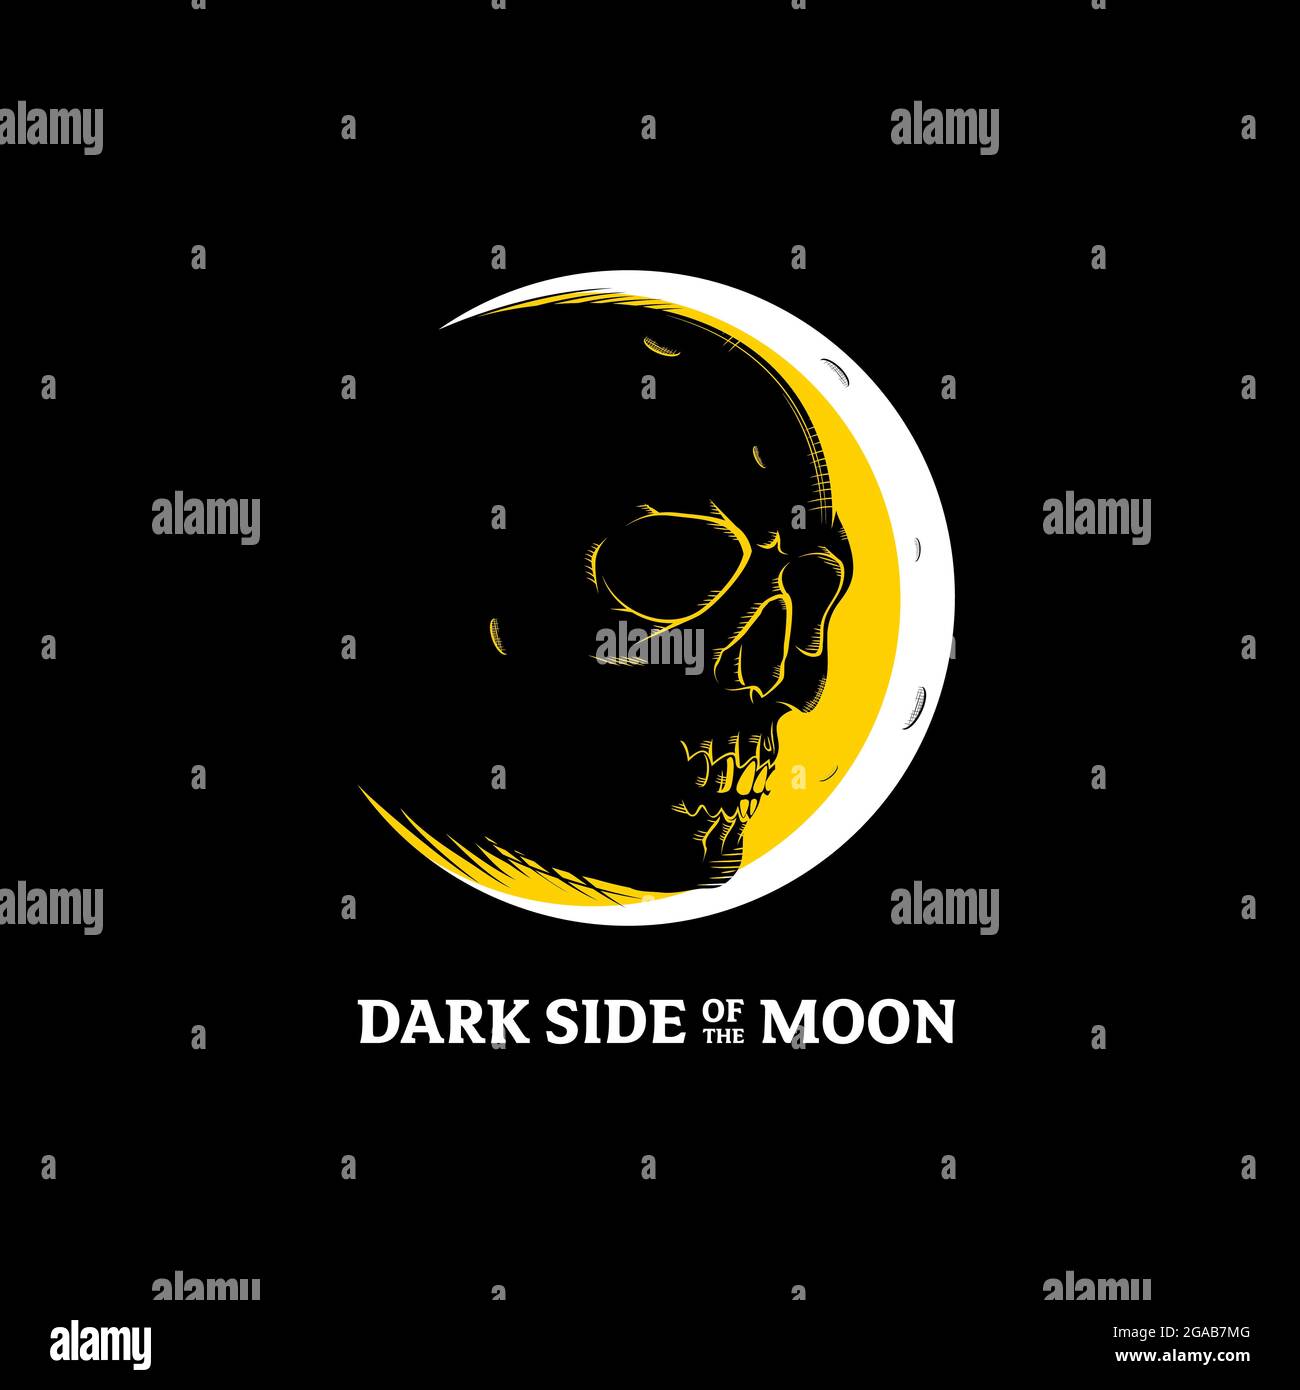 Dark side of the Moon vector illustration Stock Vector